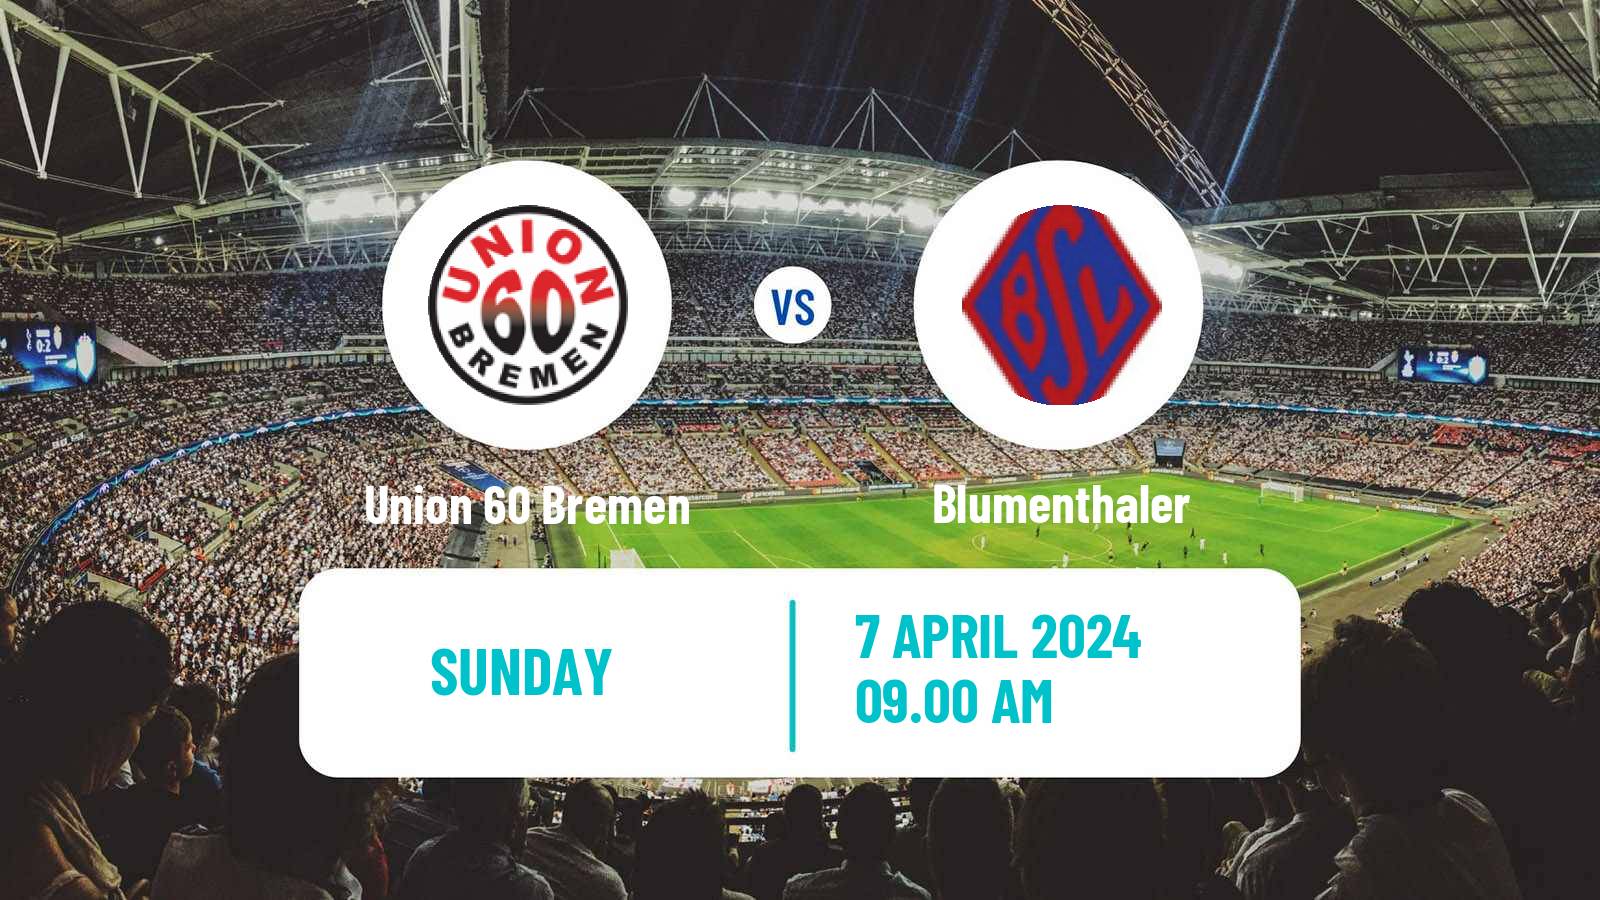 Soccer German Oberliga Bremen Union 60 Bremen - Blumenthaler